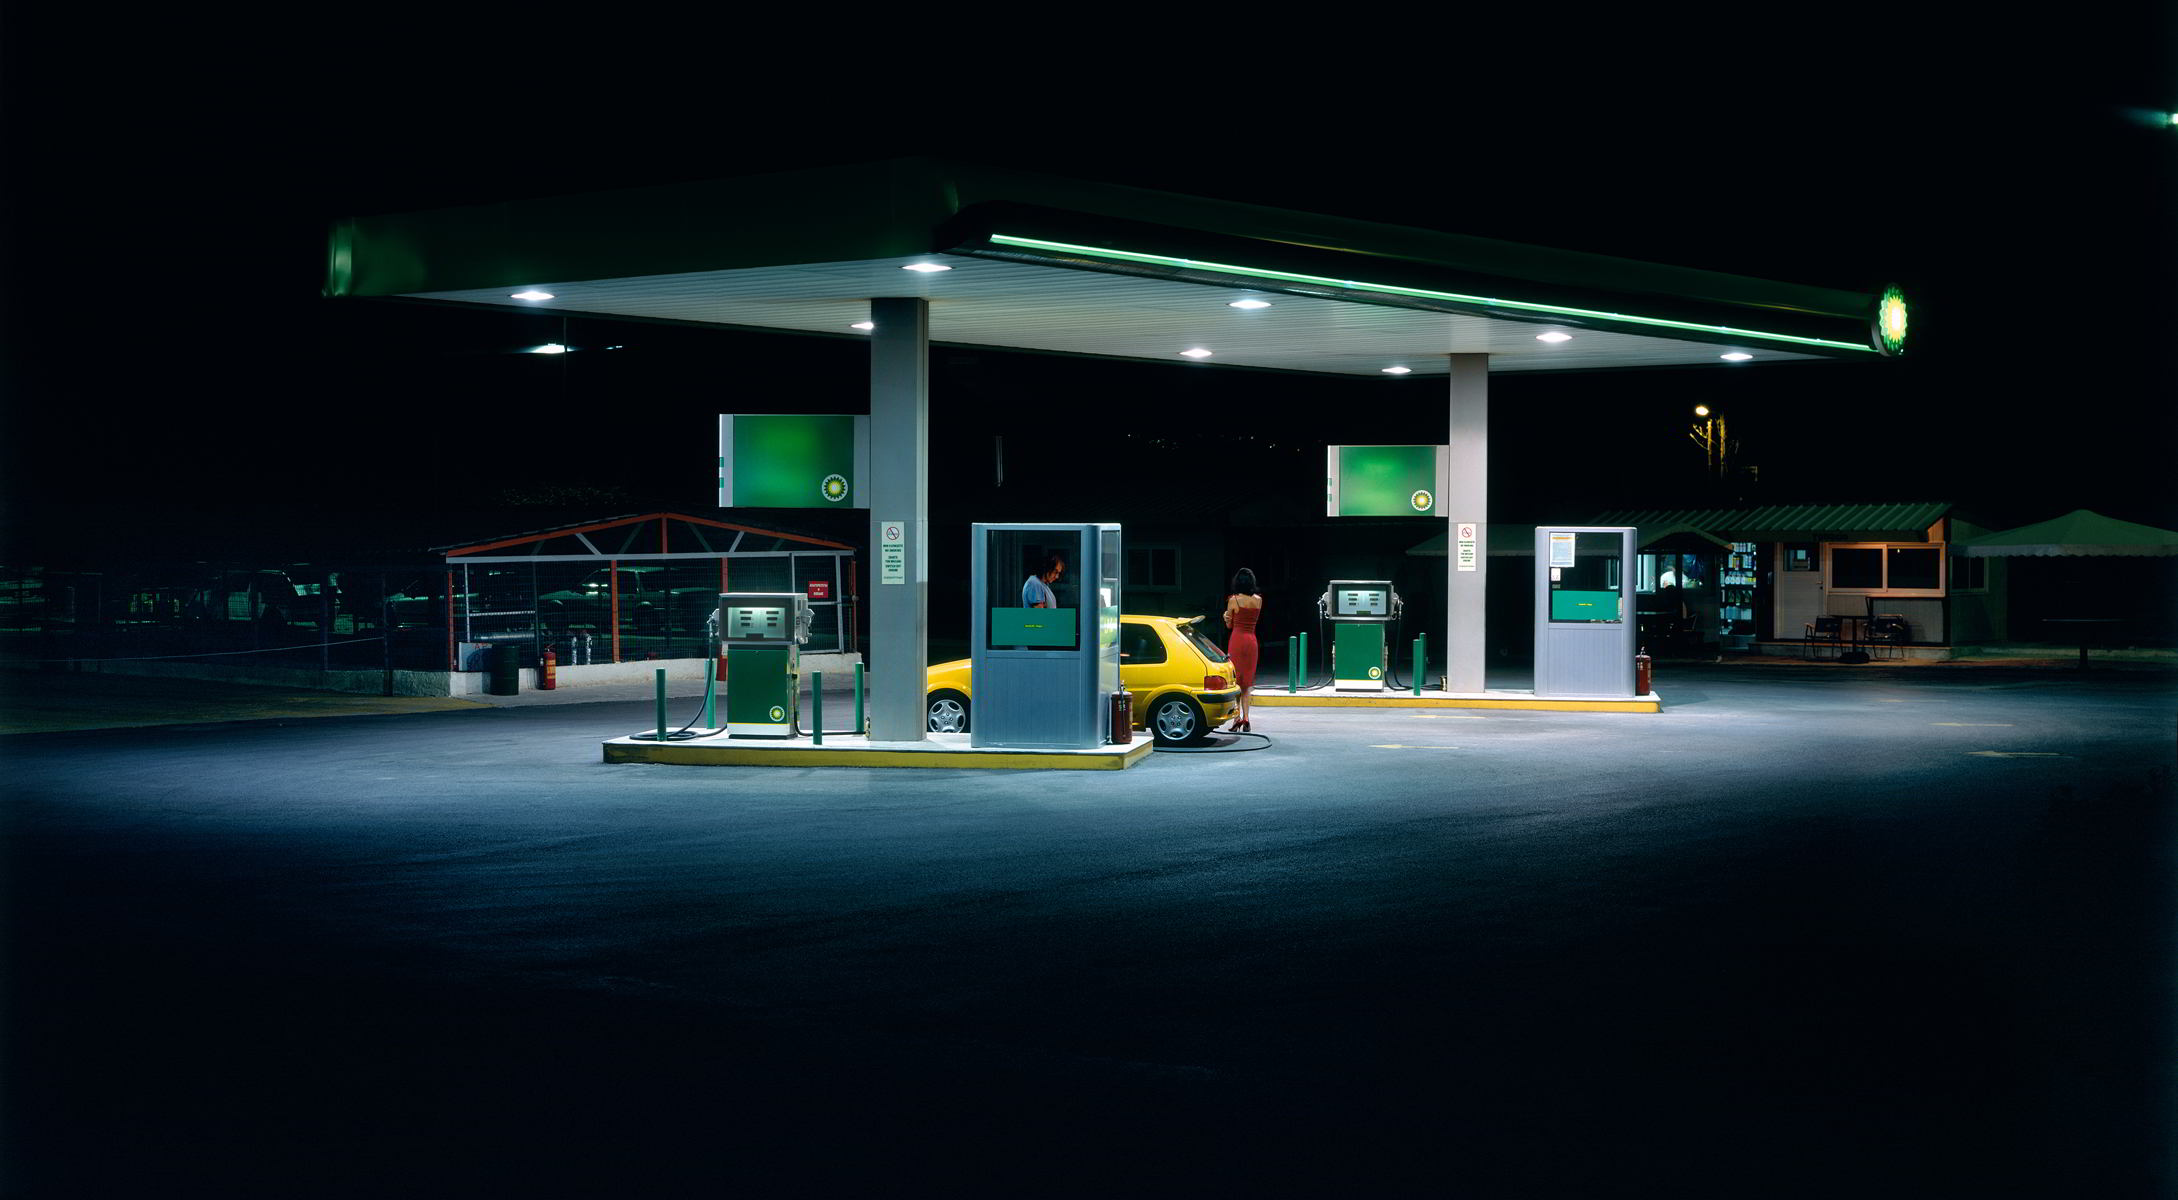 gas_station